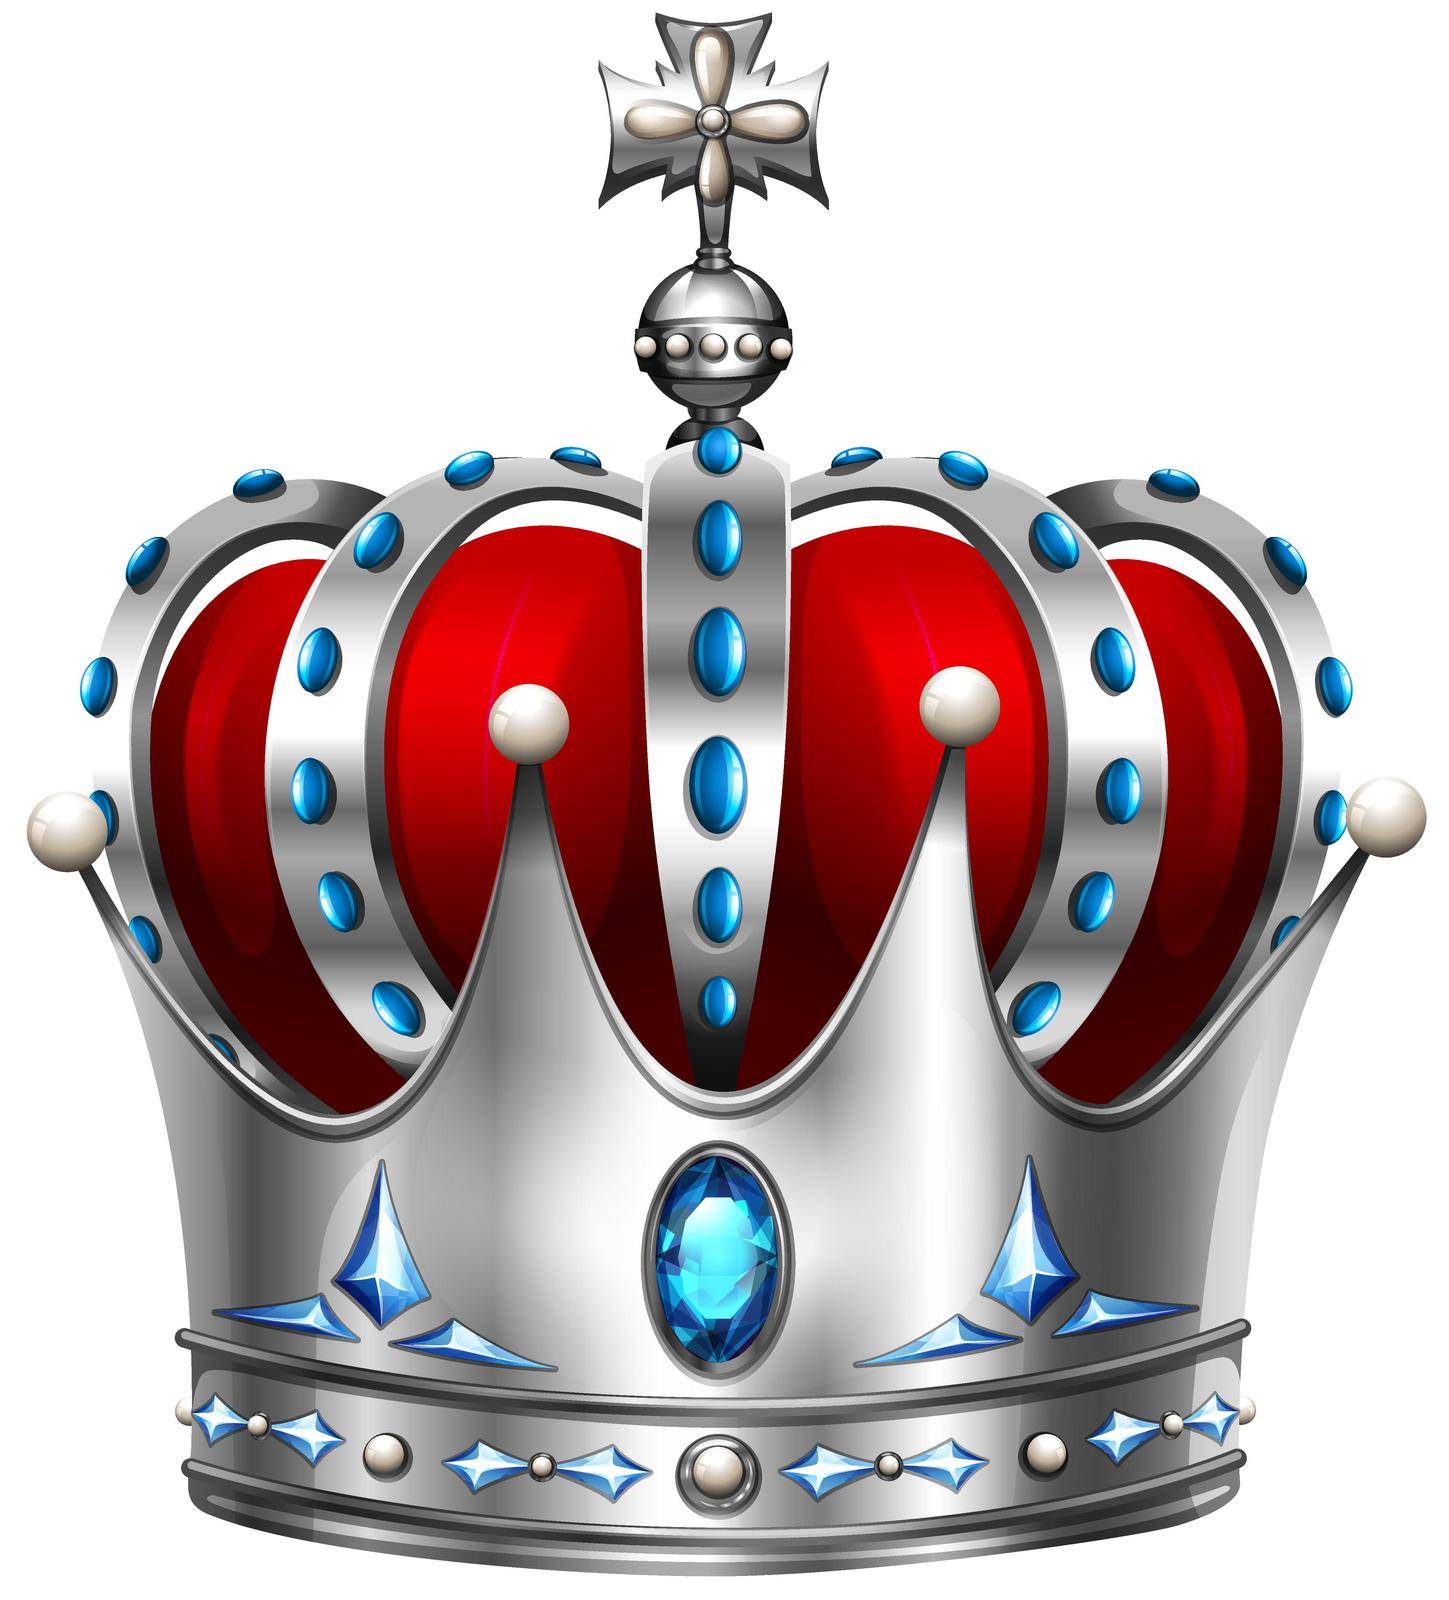 Silver crown on white illustration